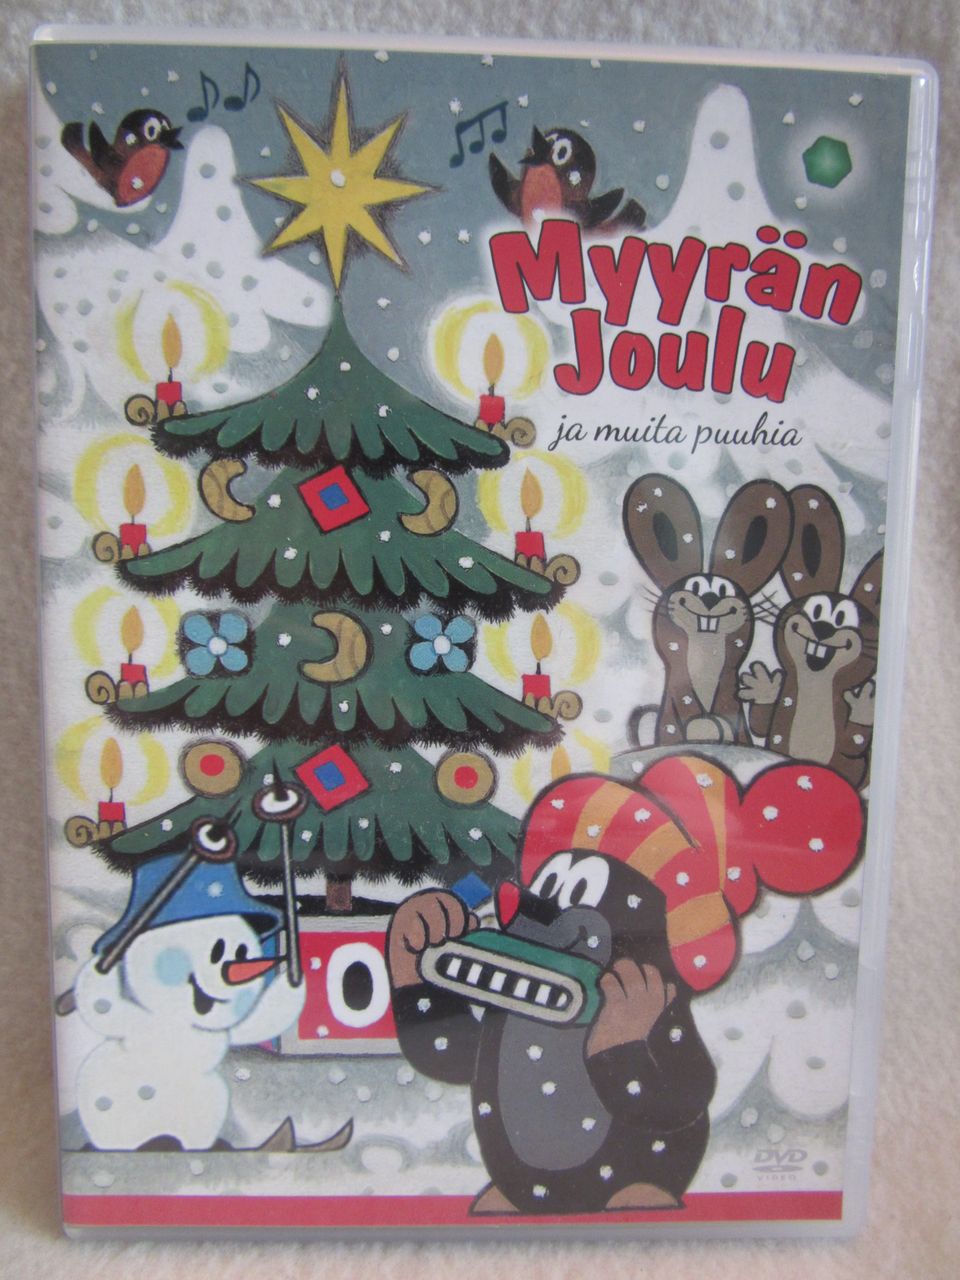 Myyrän Joulu dvd